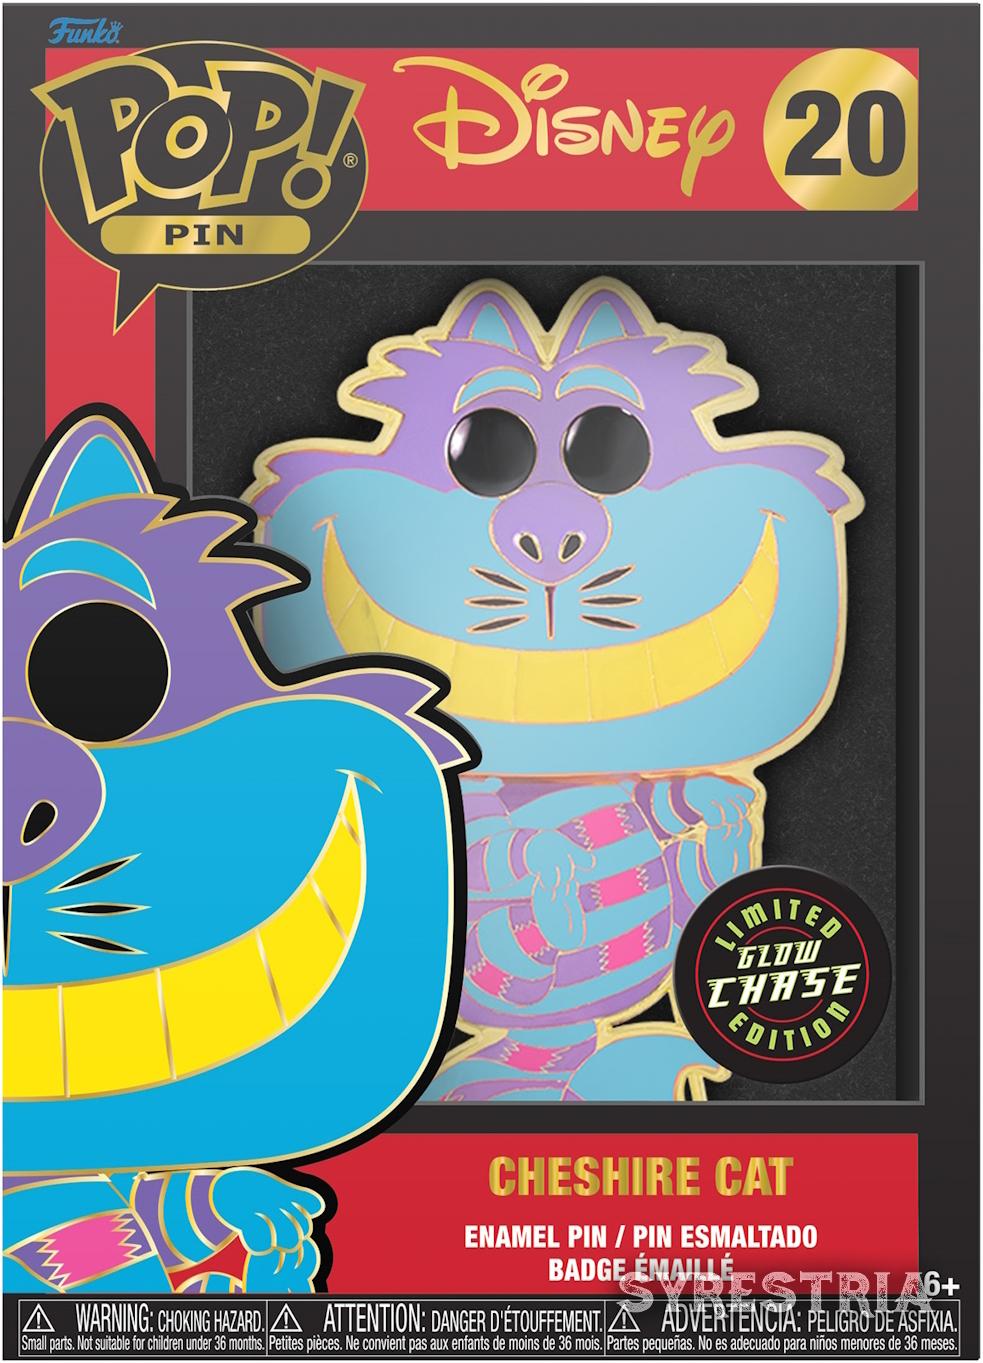 Disney - Cheshire Cat Grinsekatze 20 Glow Chase - Funko Pop! Pin